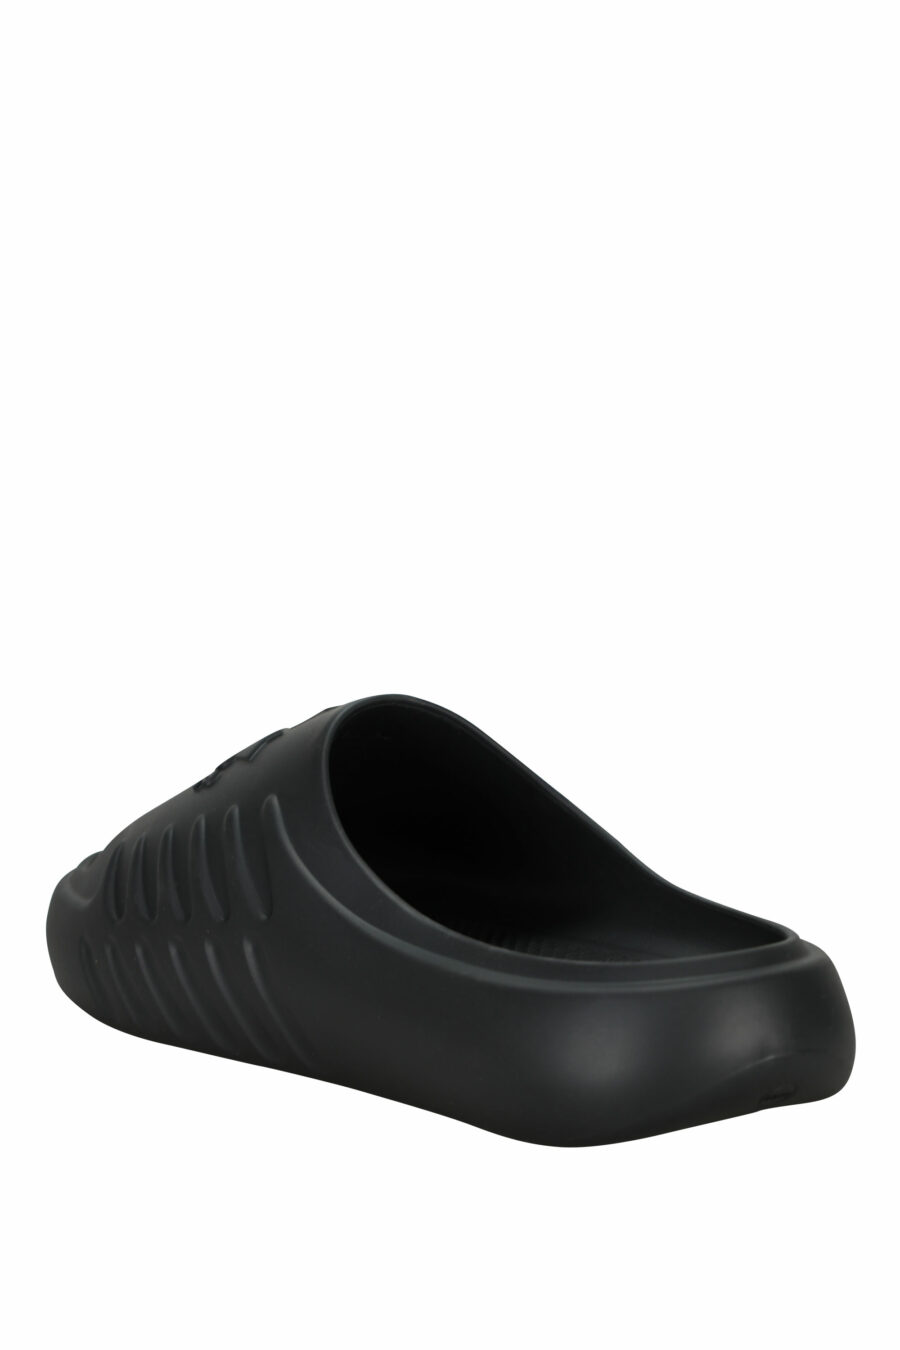 Black rubber flip flops with monochrome logo - 8055777295403 3